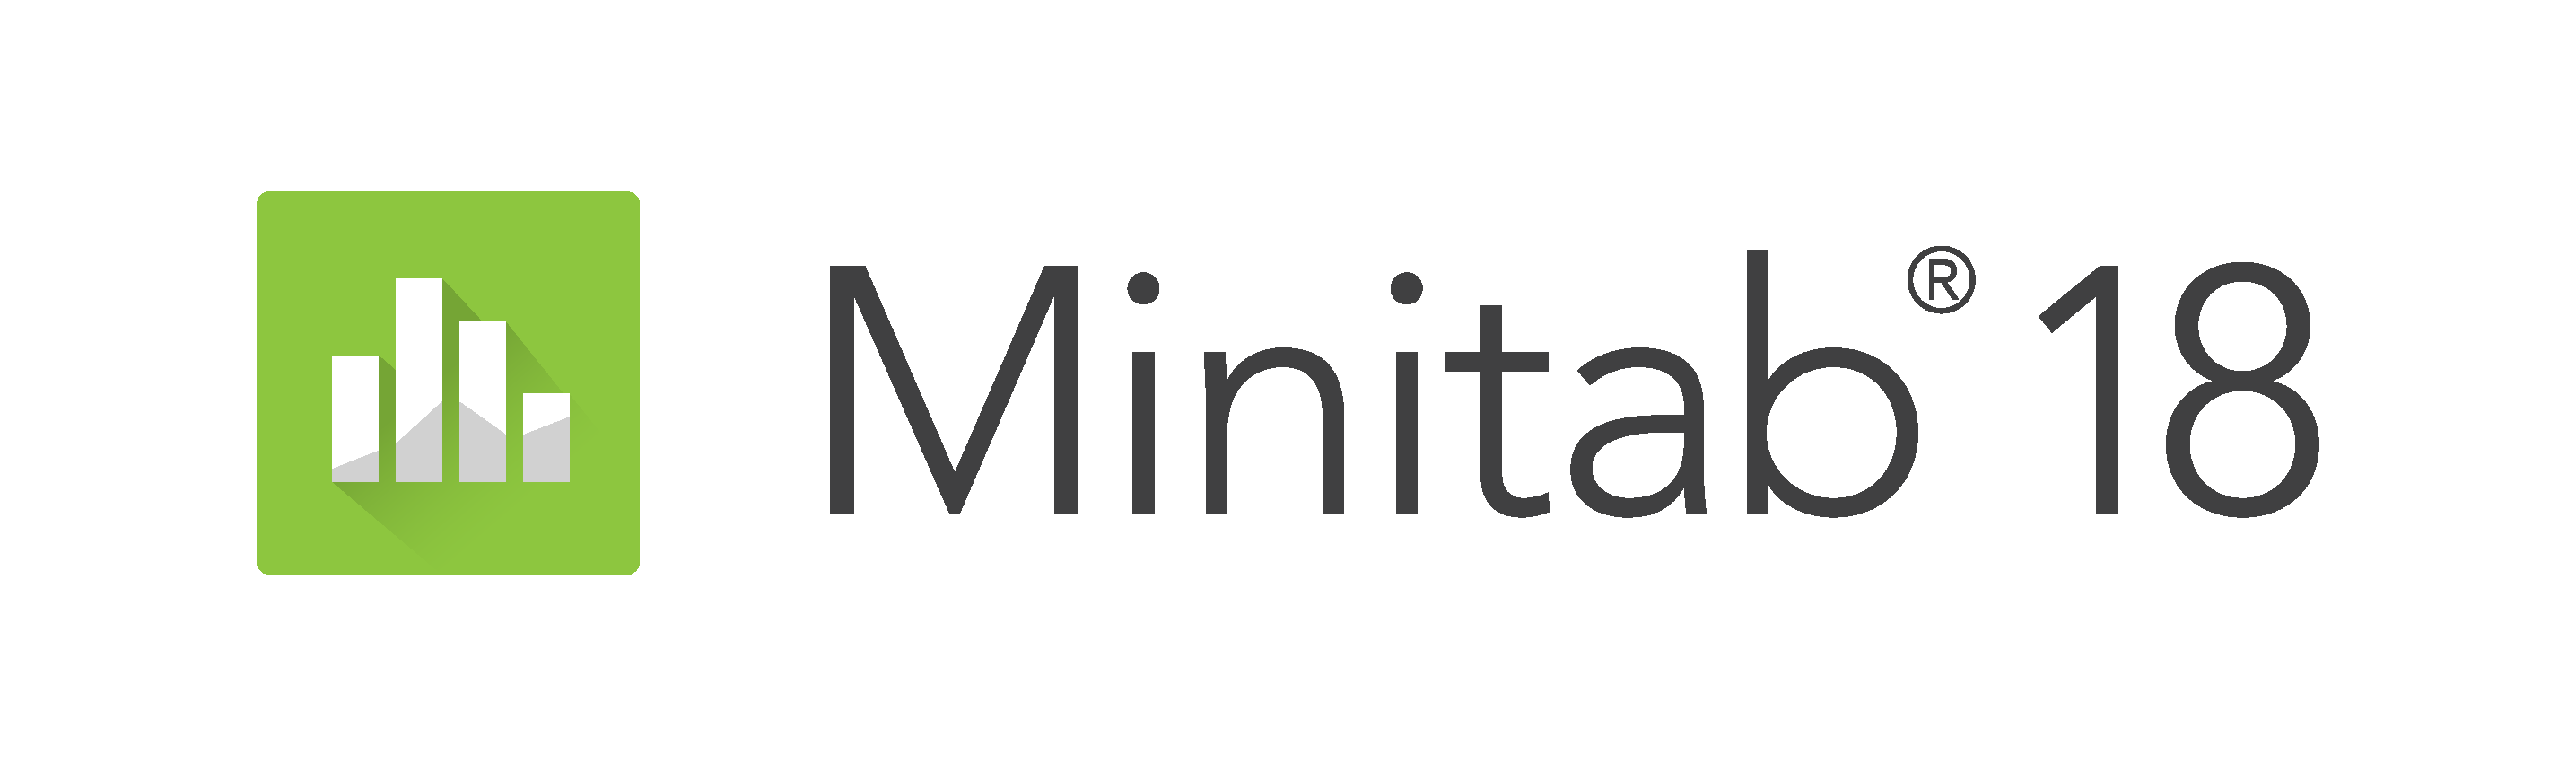 minitab 18 for mac free download